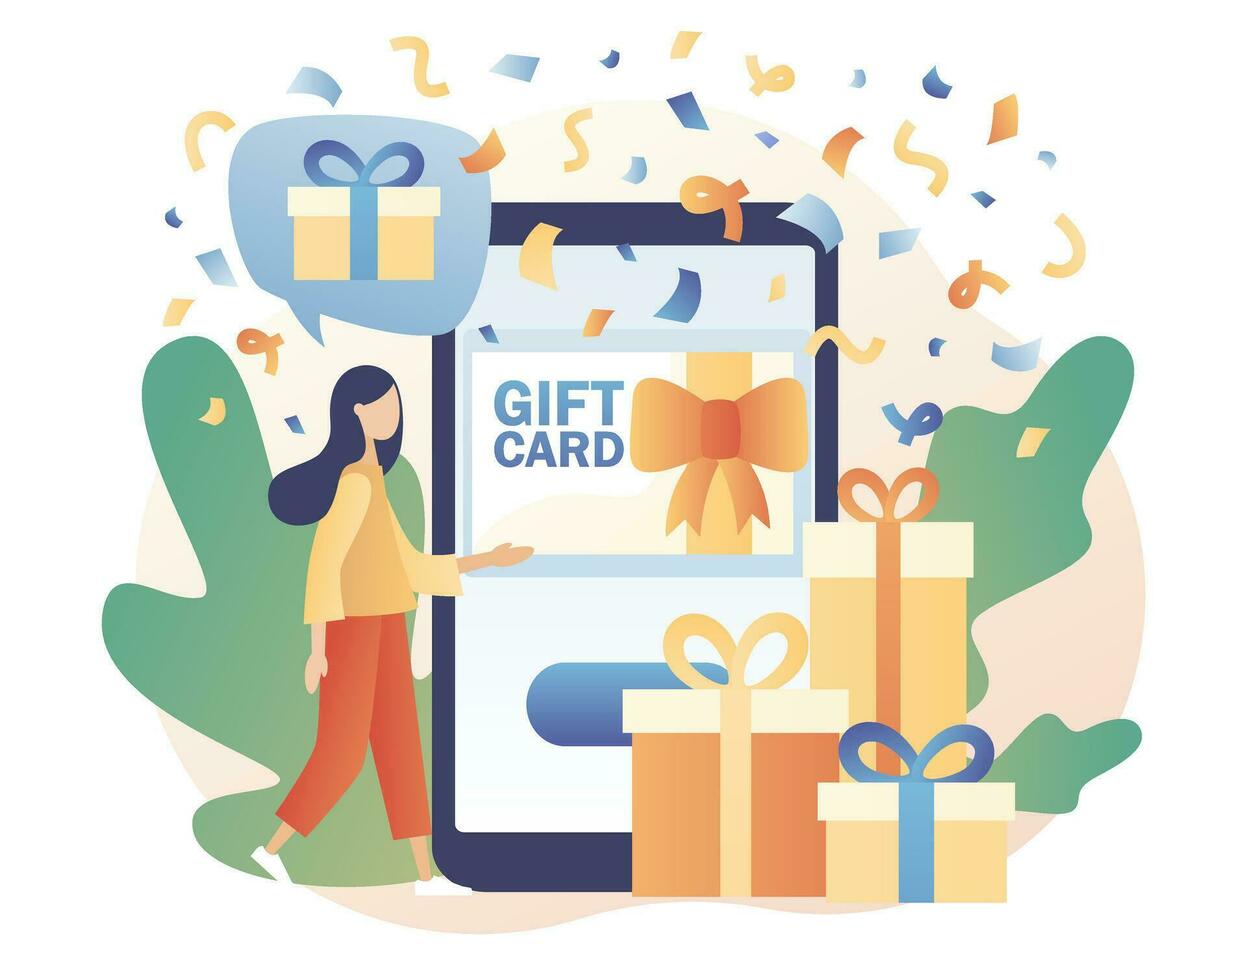 Gift card, certificate, voucher or coupon online in smartphone app. Sale, loyalty program, bonus, marketing. Promotion strategy concept. Modern flat cartoon style. Vector illustration